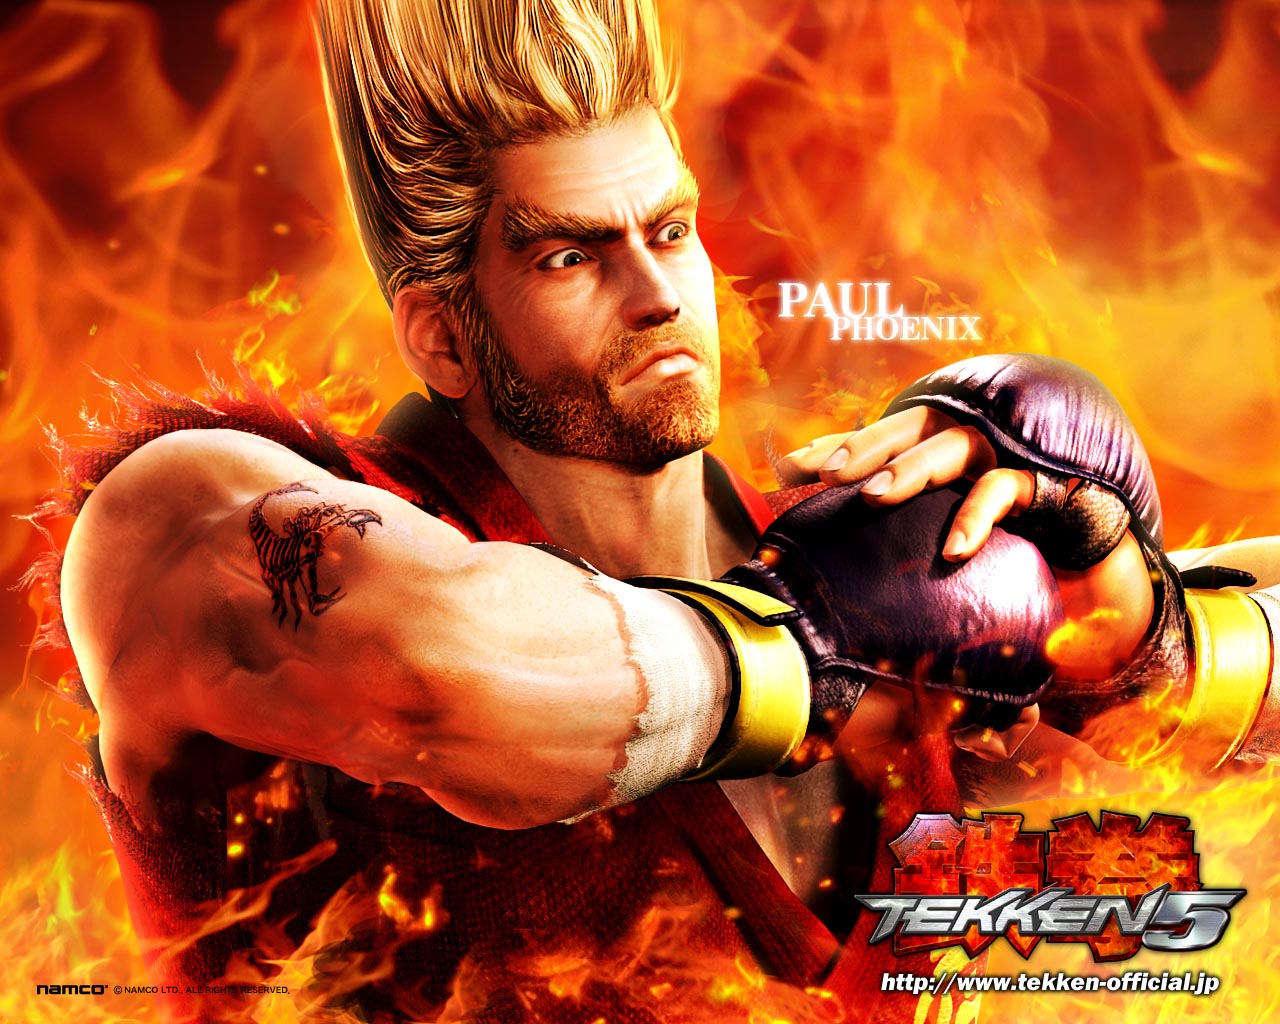 HD wallpapers: Tekken 5 Game HD Wallpapers all characters 